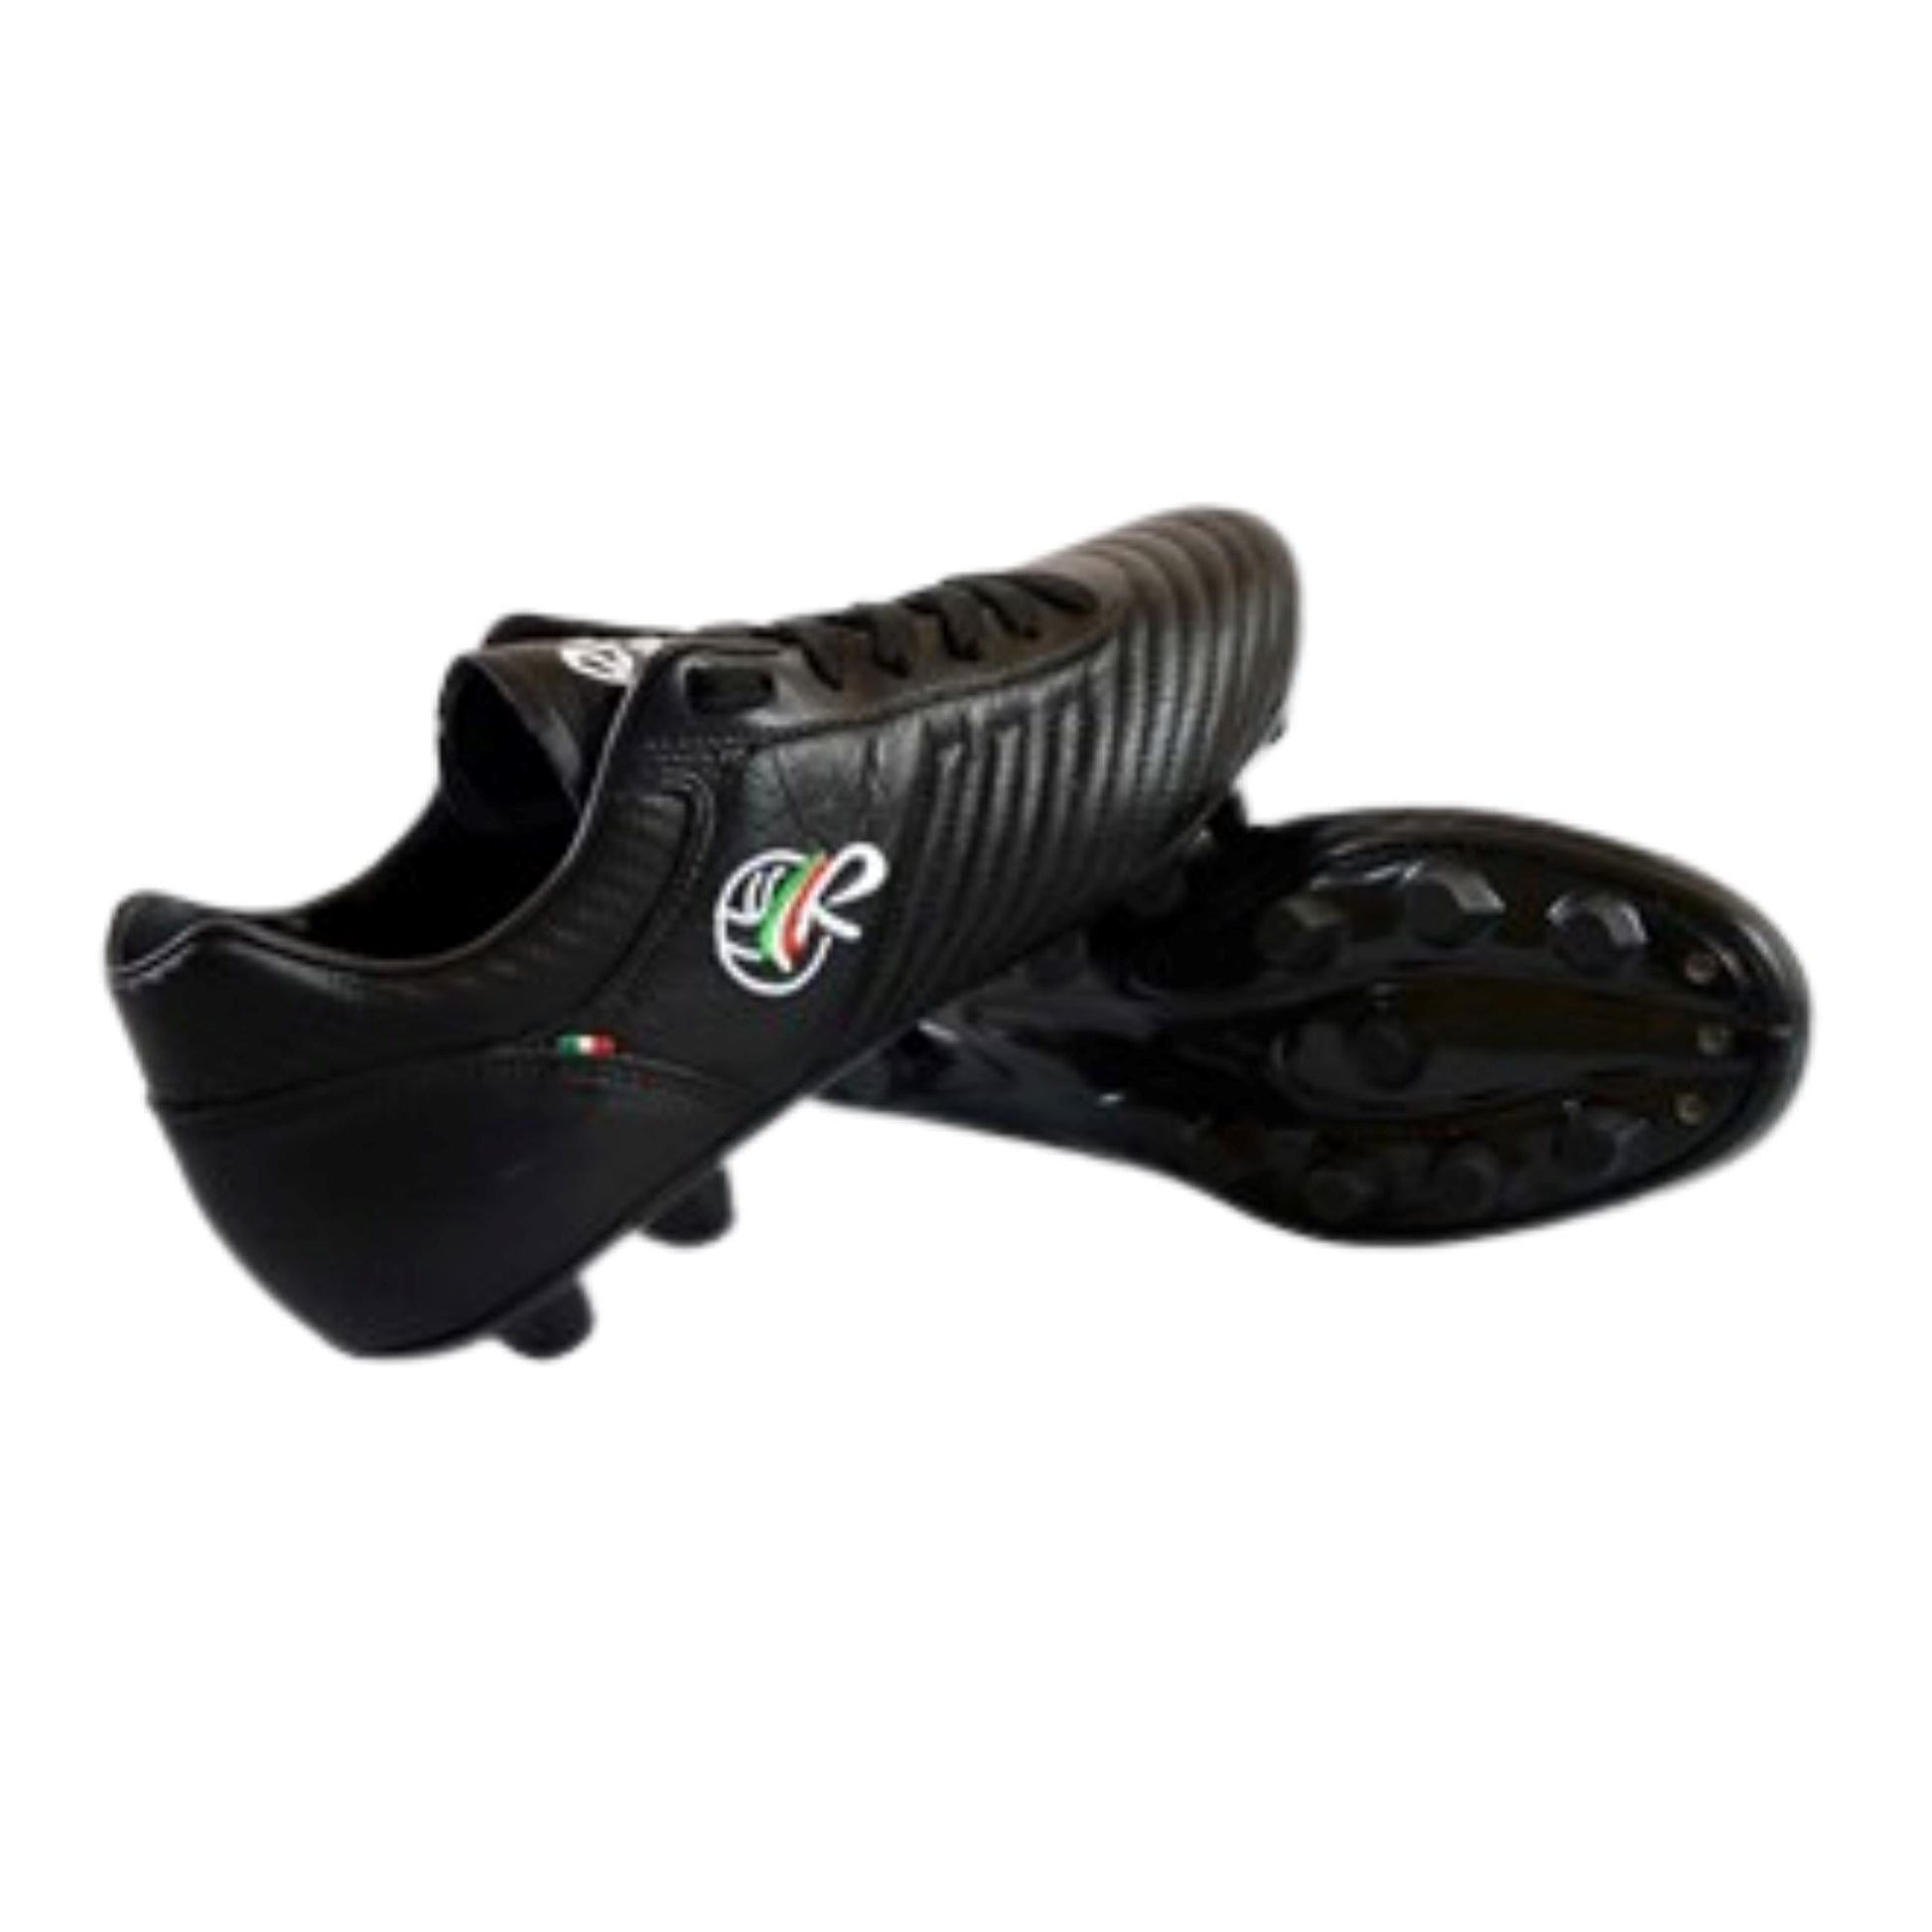 Artisan 2.0 FG Tech Football Boots by Ryal shoes ITASPORT 